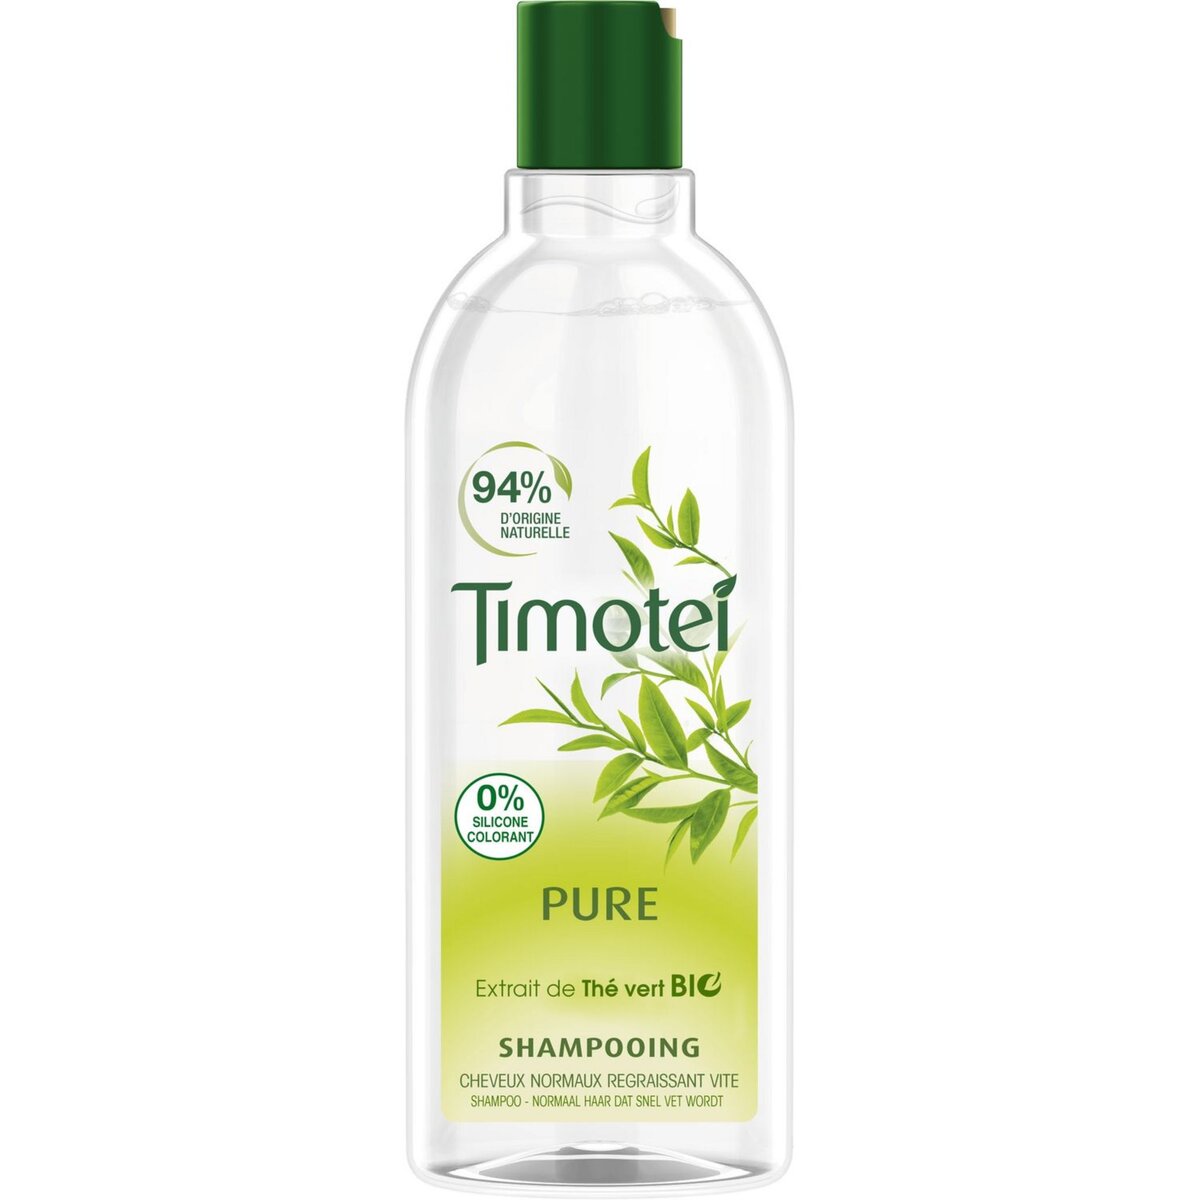 TIMOTEI Shampooing thé vert bio cheveux normaux regraissant vite 400ml